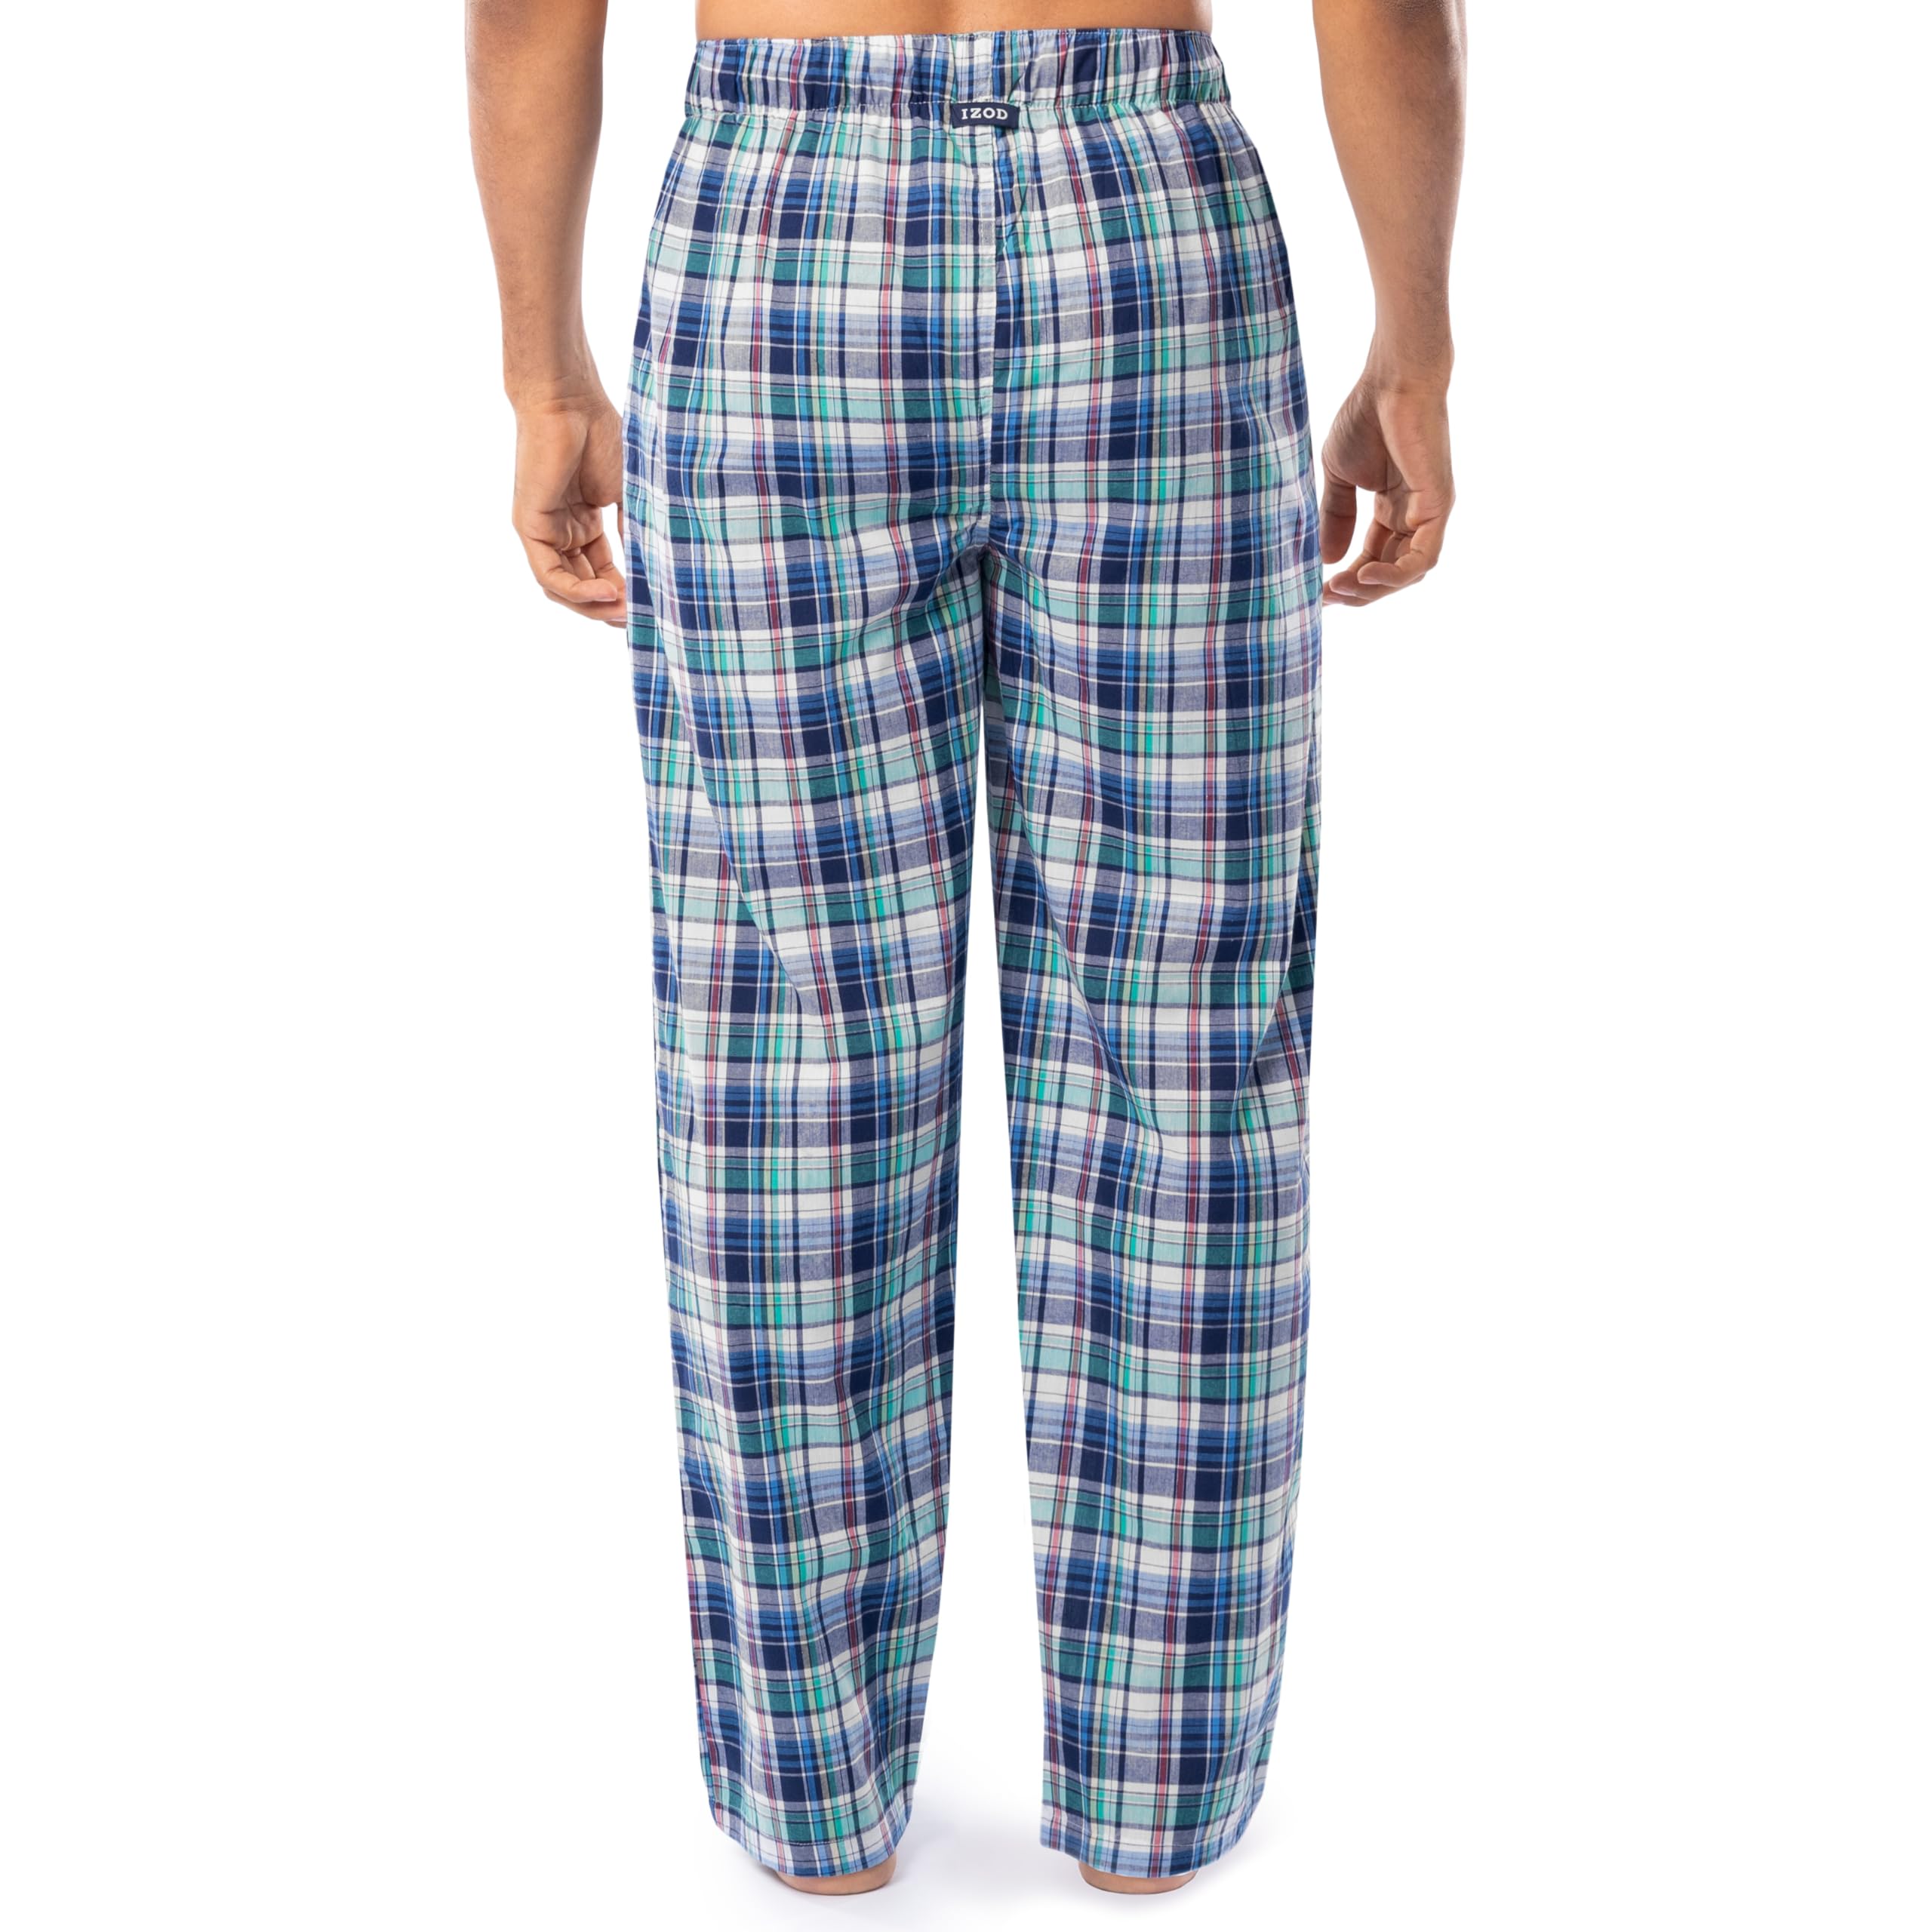 IZOD Men's Relaxed Fit Printed Poplin Drawstring Sleep Pajama Pant